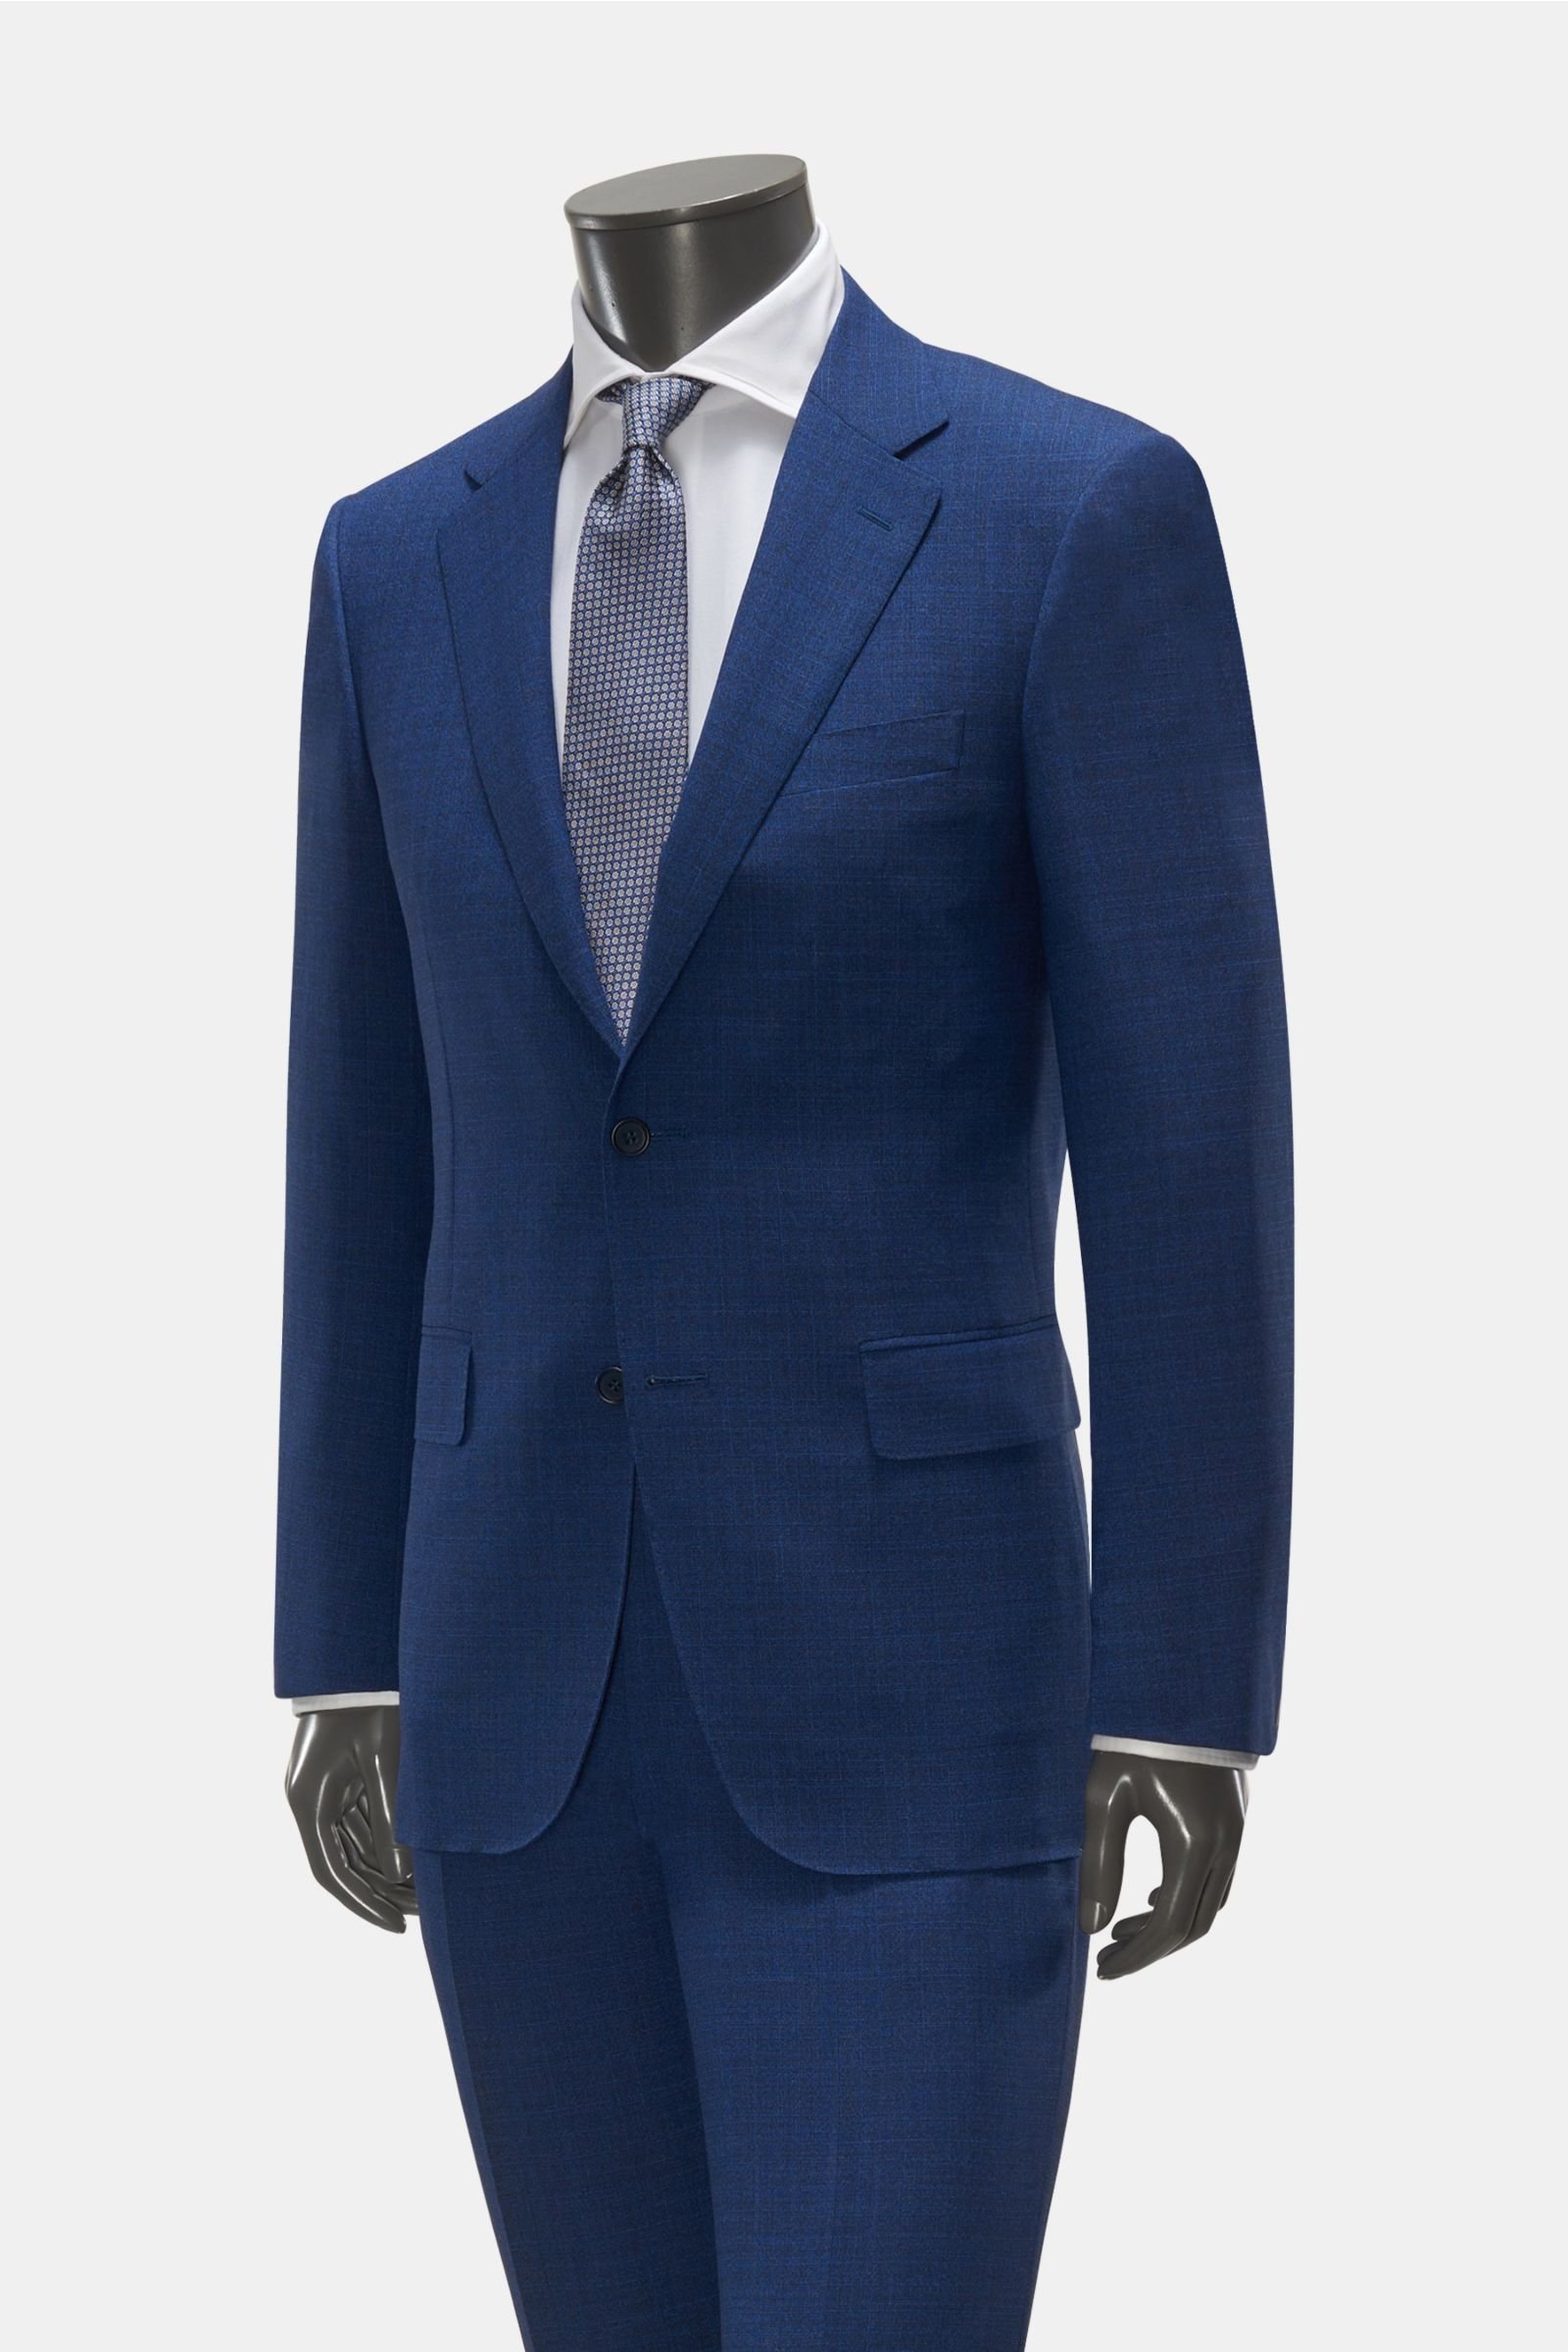 CANALI suit 'Impeccabile 2.0' dark blue checked | BRAUN Hamburg